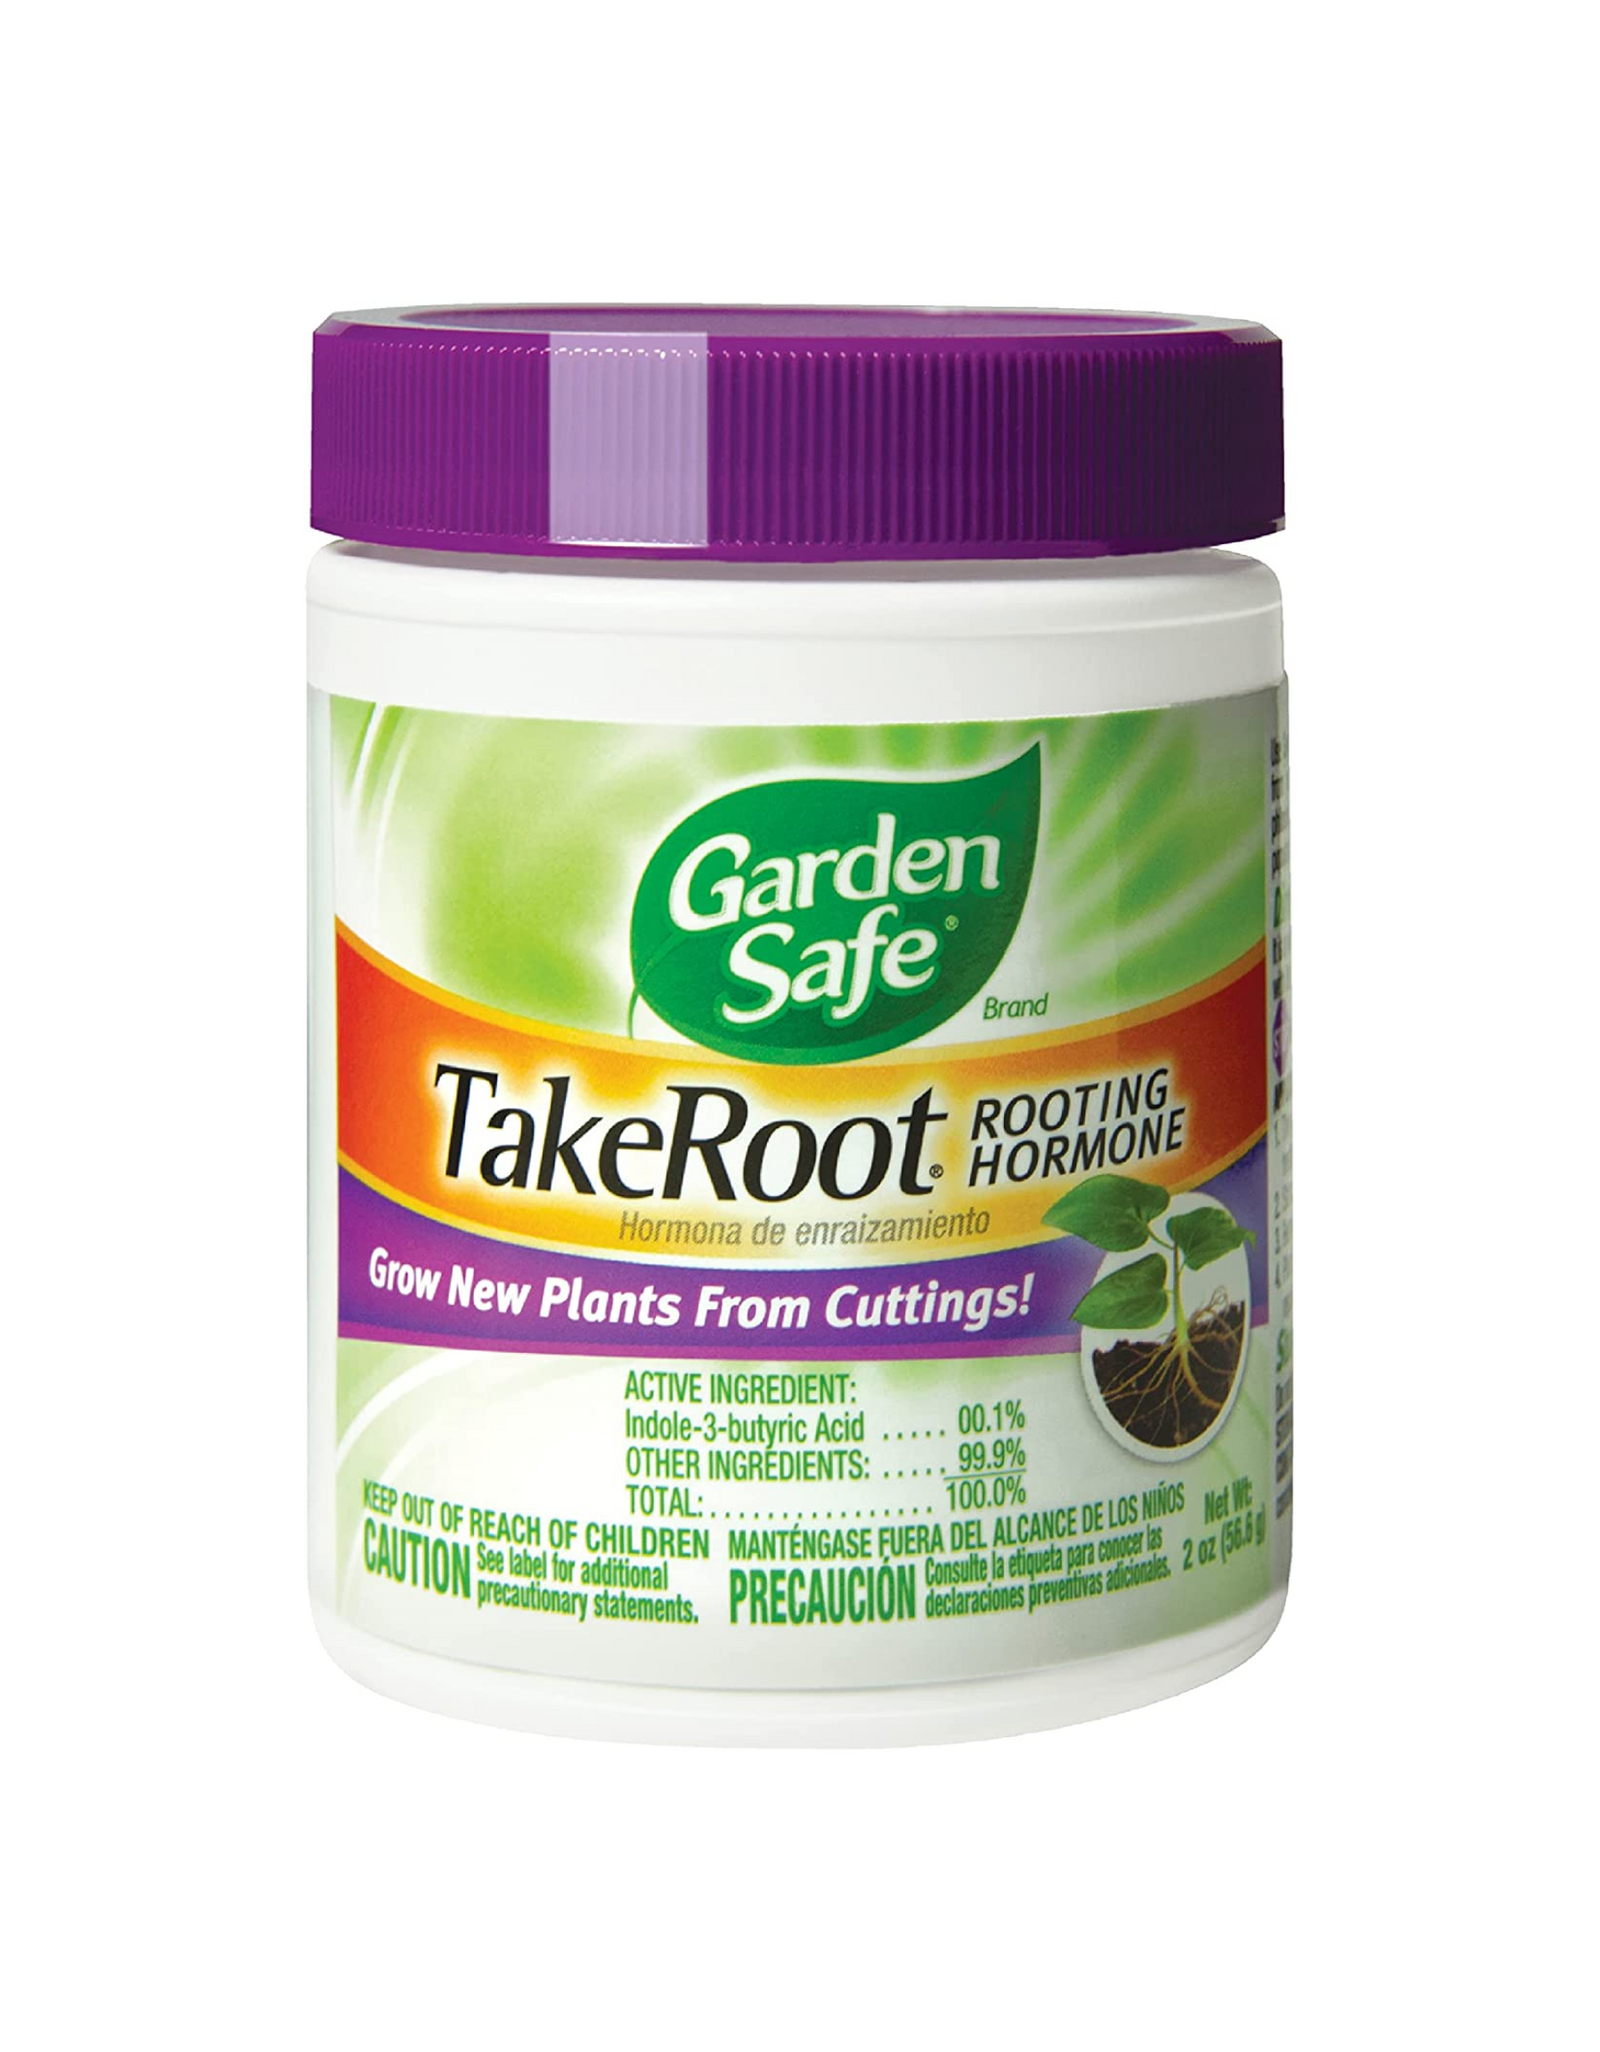 Garden Safe HG-93194 TakeRoot Rooting Hormone, 2-oz, 12 Pack